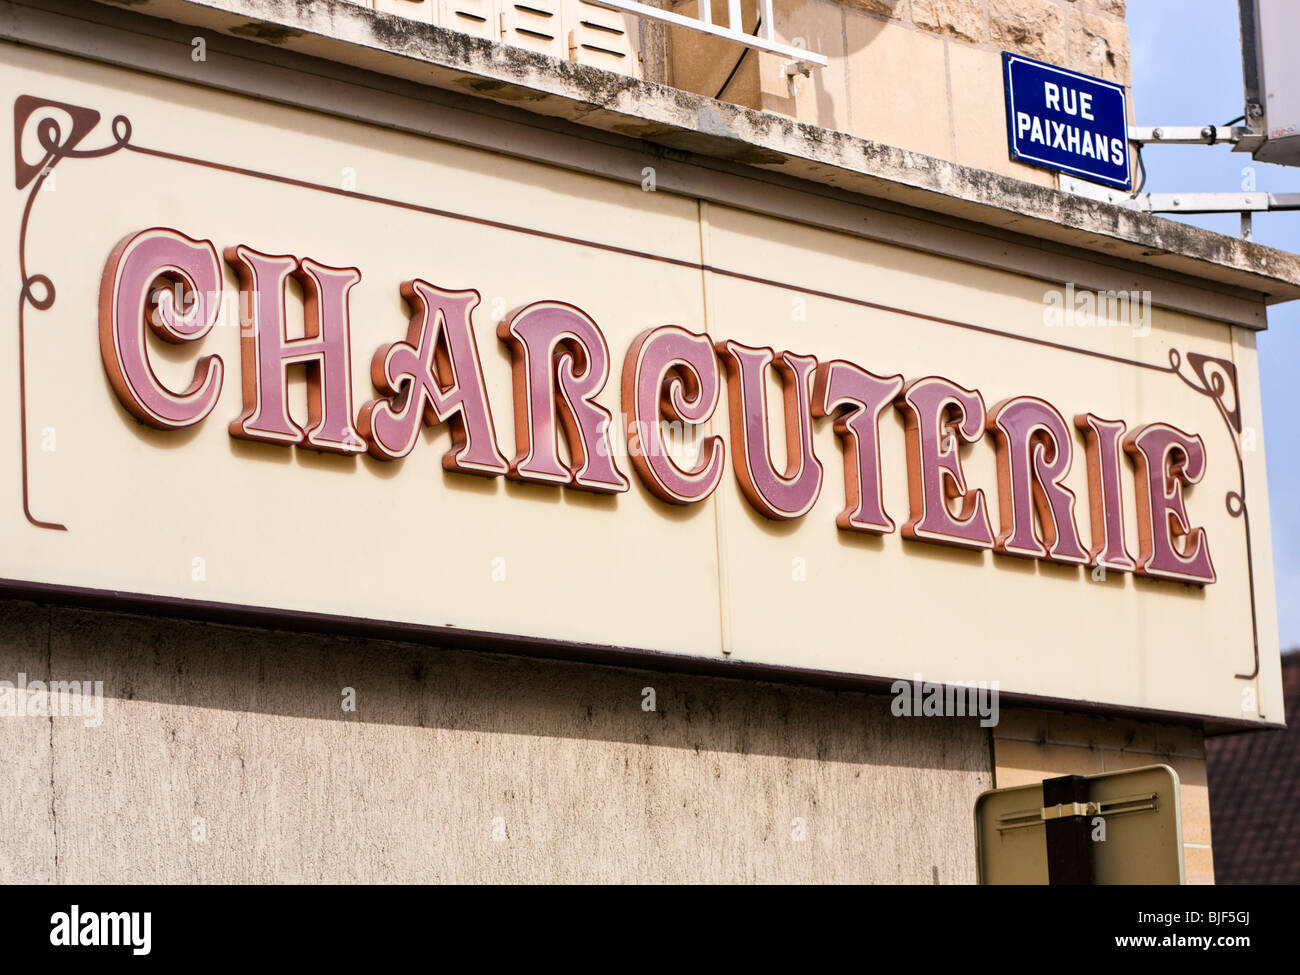 Charcuterie delicatessen signage France Europe Stock Photo